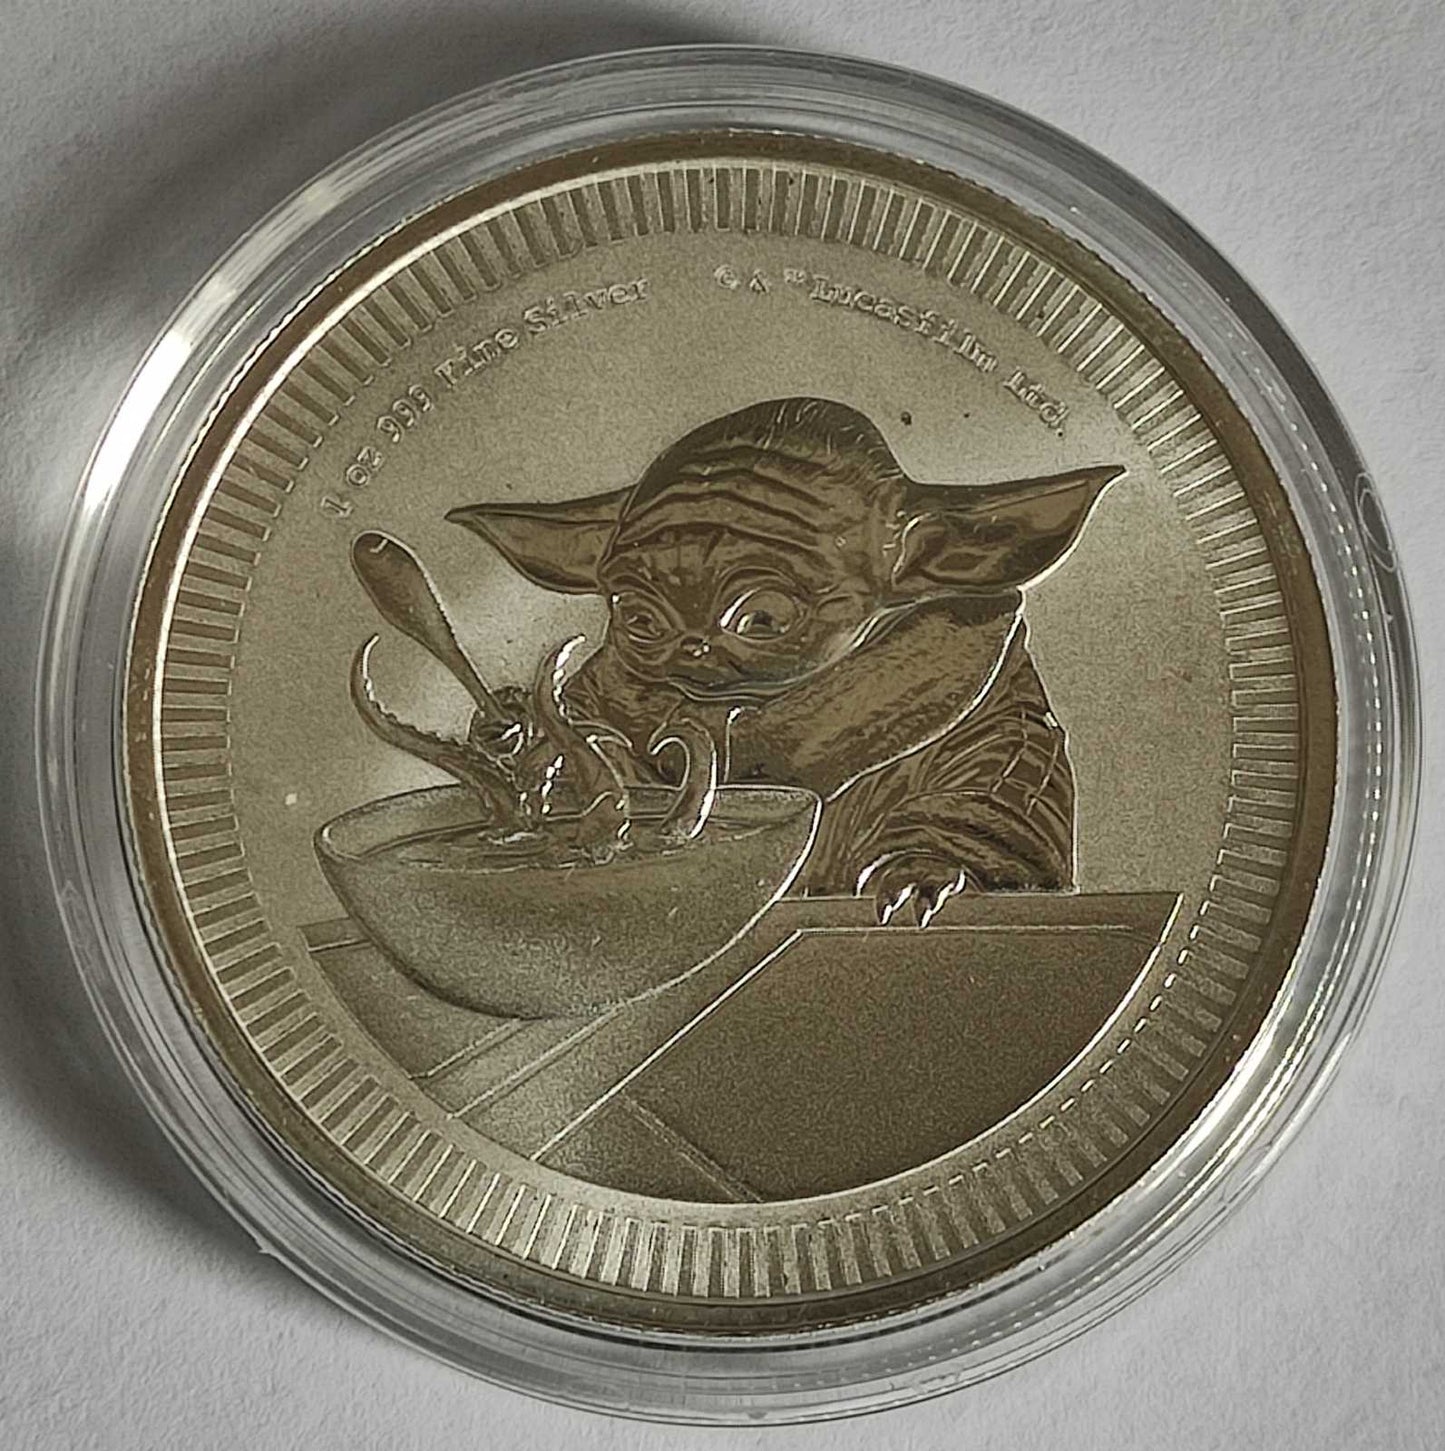 2022 Niue Star Wars: Grogu "Baby Yoda" 1 oz Silver Coin BU in Capsule